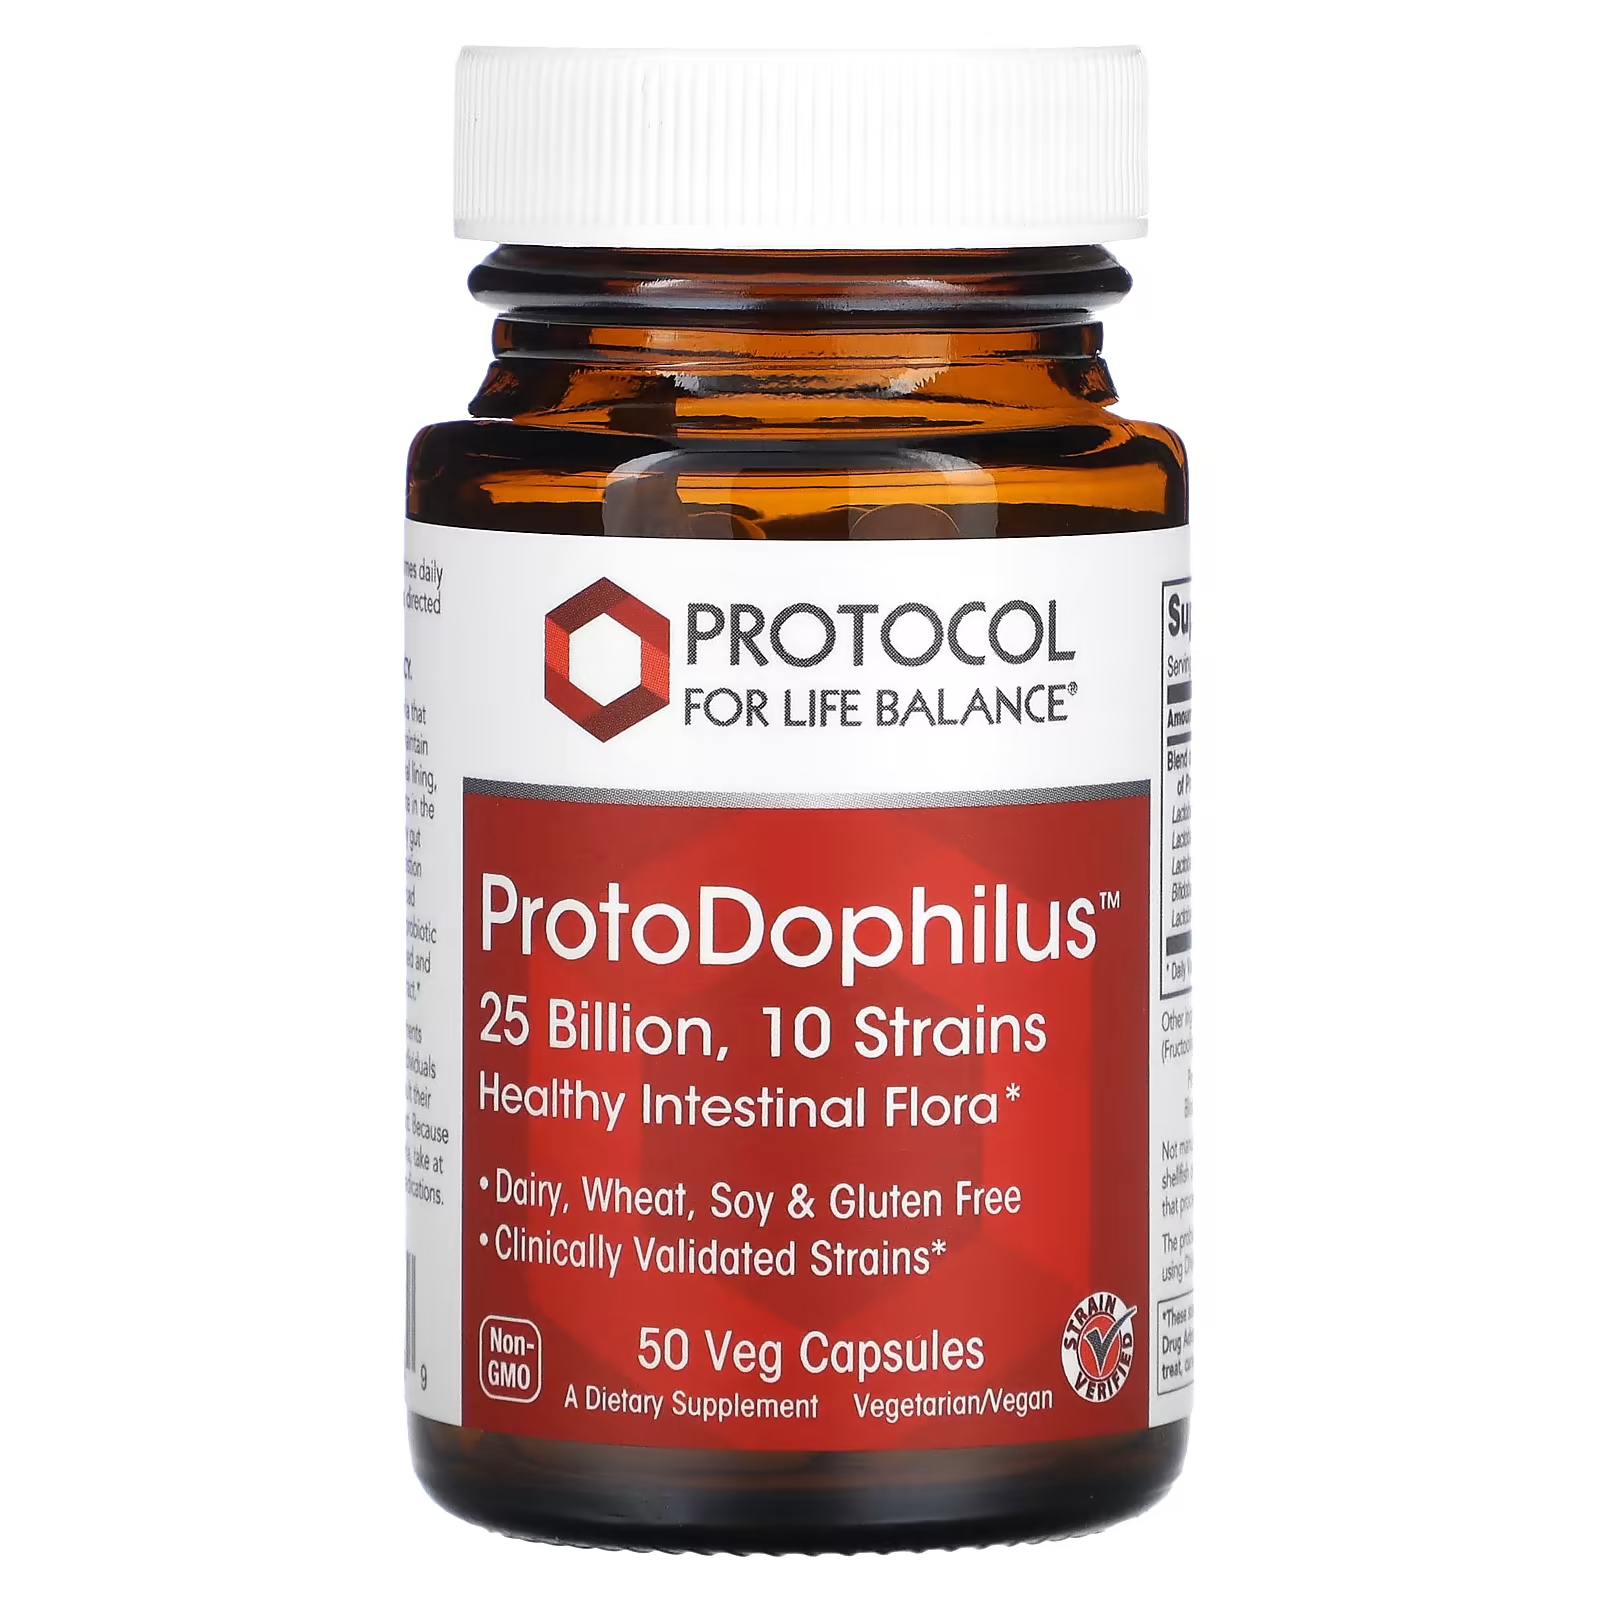 Пищевая добавка Protocol for Life Balance ProtoDophilus, 50 растительных капсул protocol for life balance protodophilus 25 млрд 50 растительных капсул